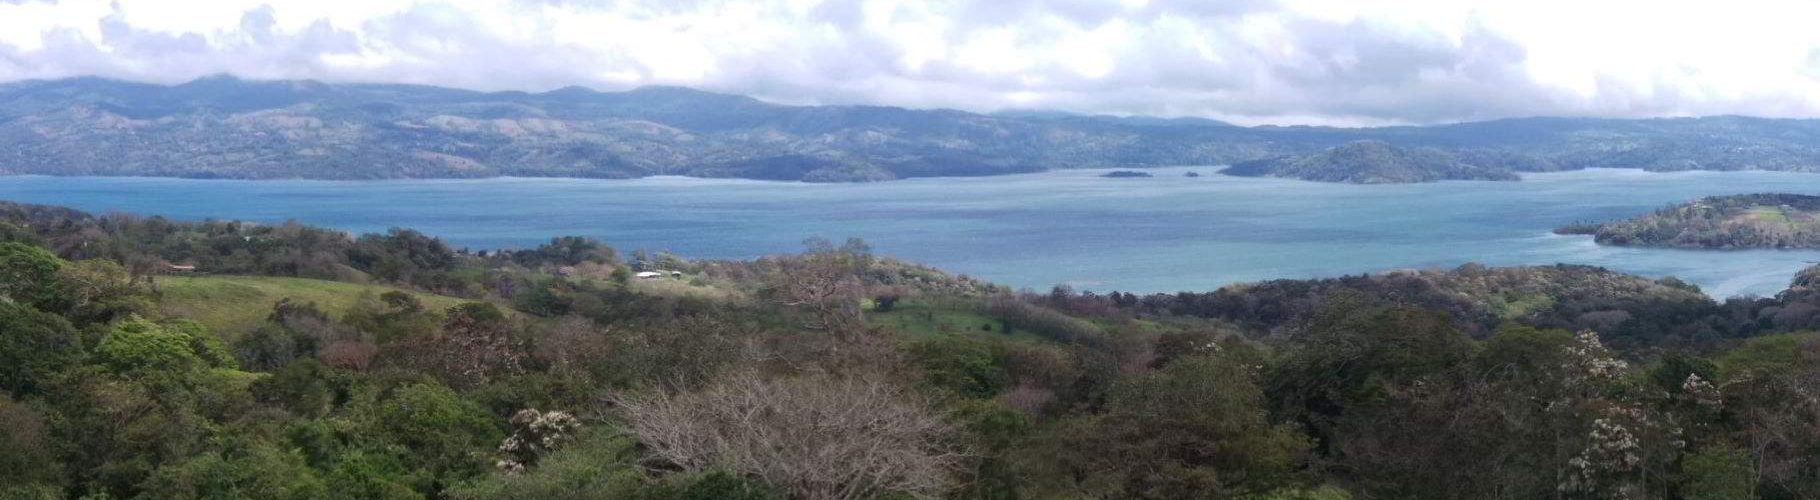 Lake-Arenal-Costa-Rica